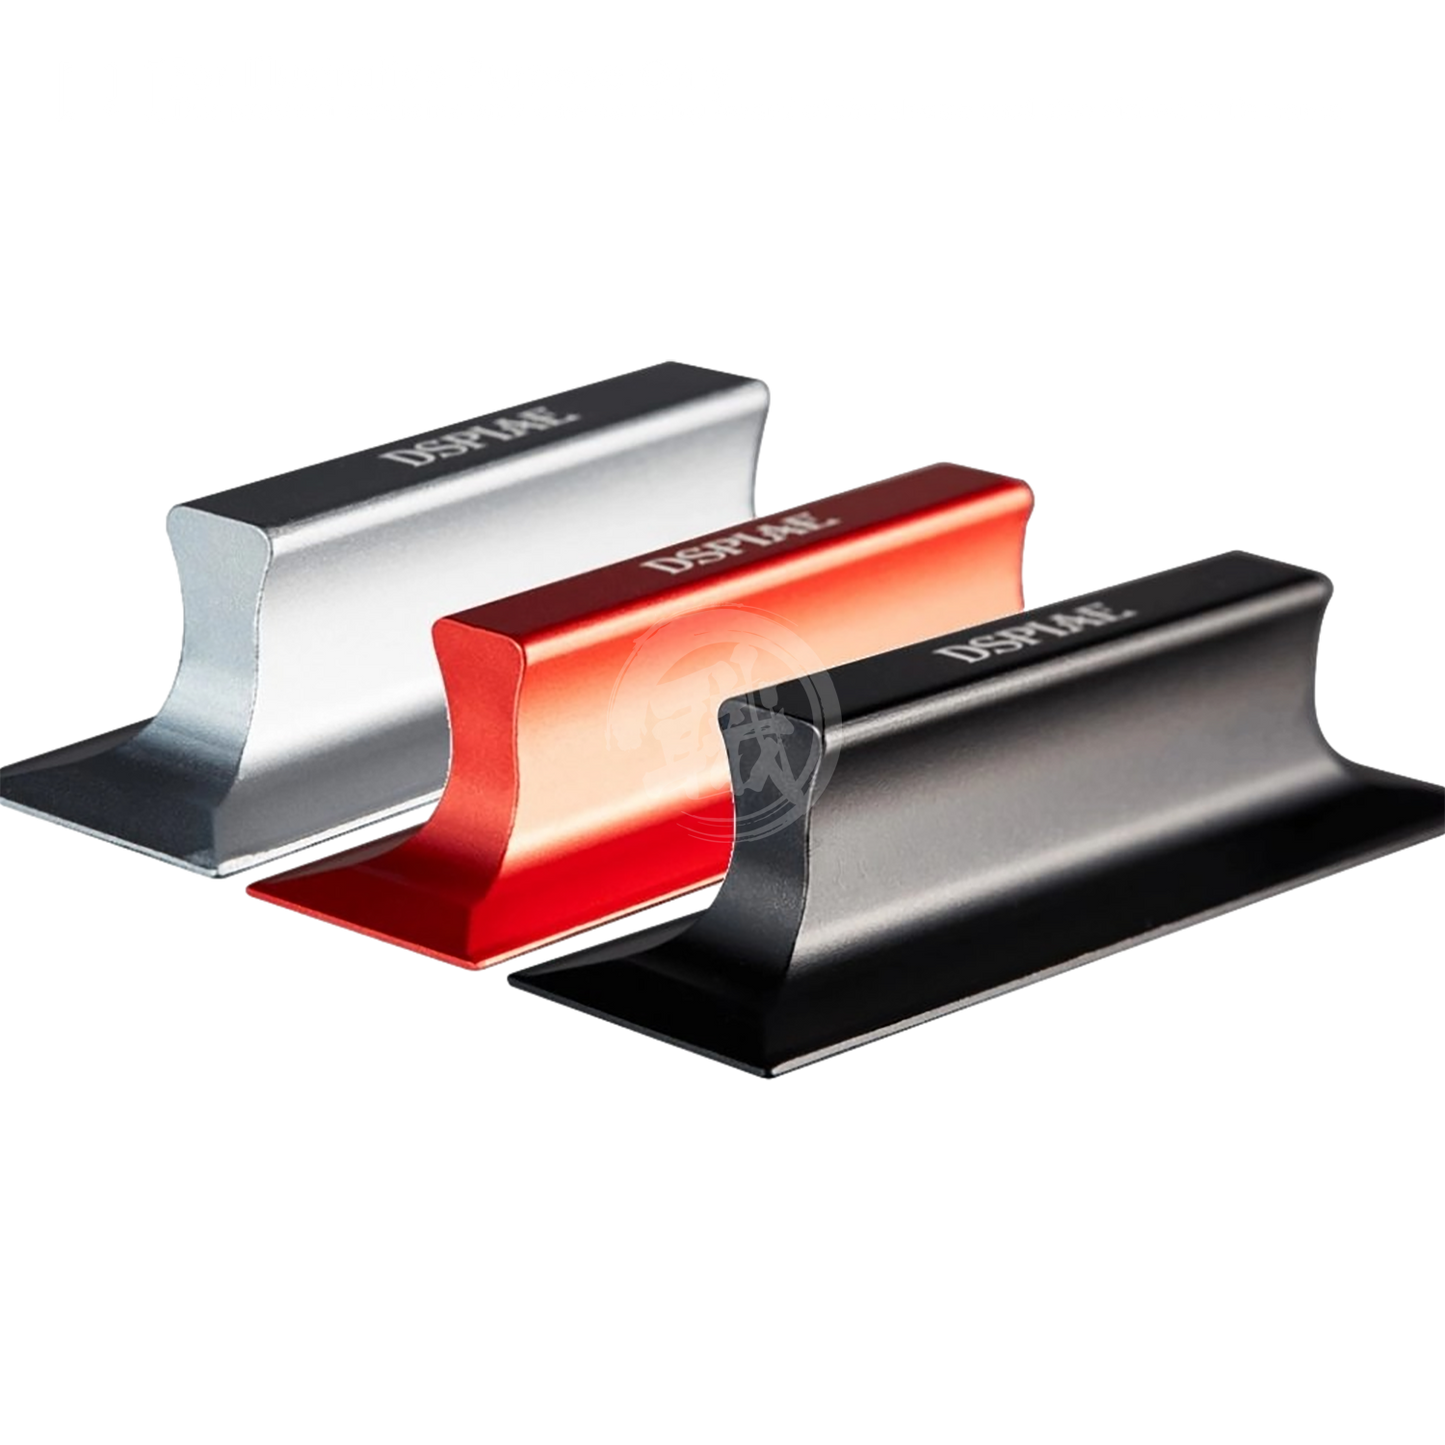 DSPIAE - Sanding Board [Flat] [Red] - ShokuninGunpla